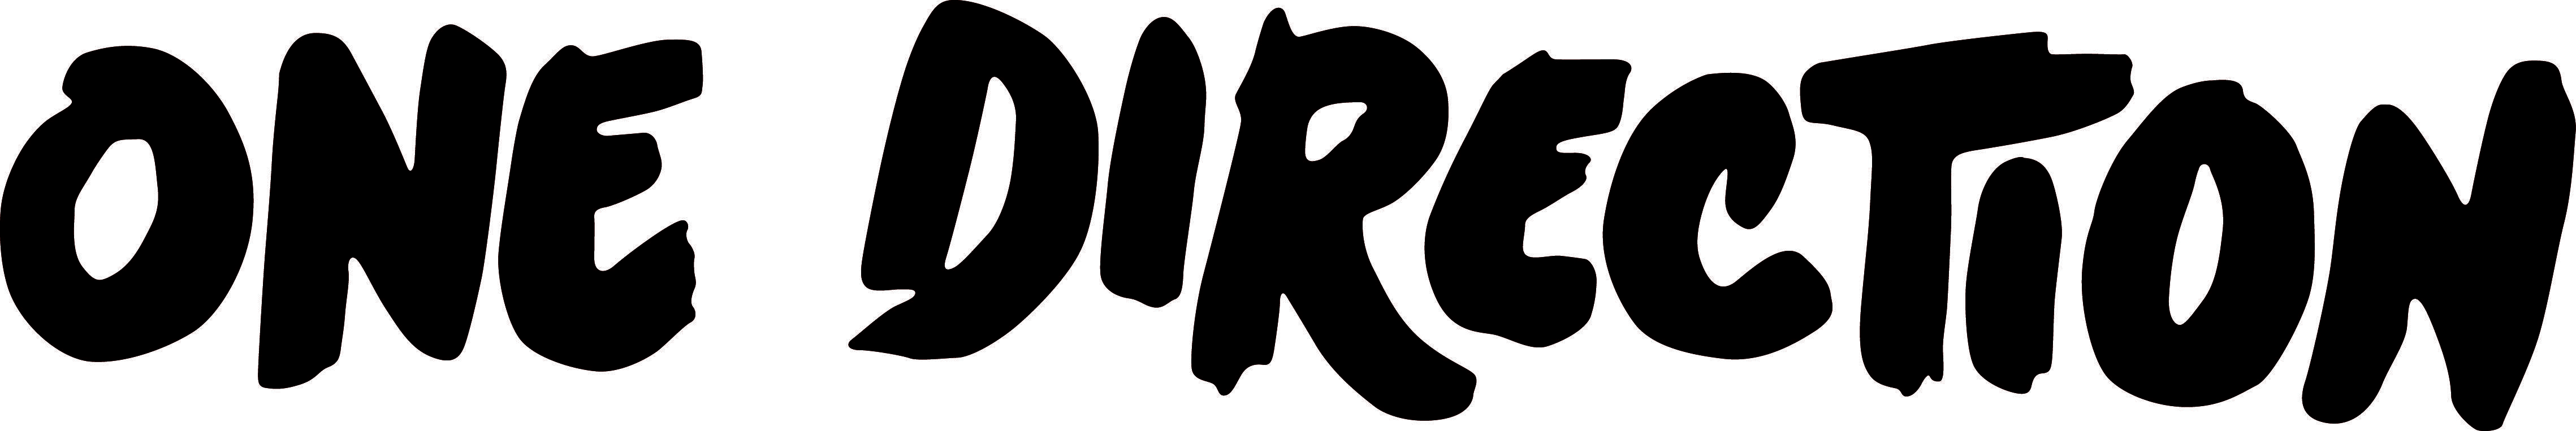 One Direction Logo - One Direction | Logopedia | FANDOM powered by Wikia